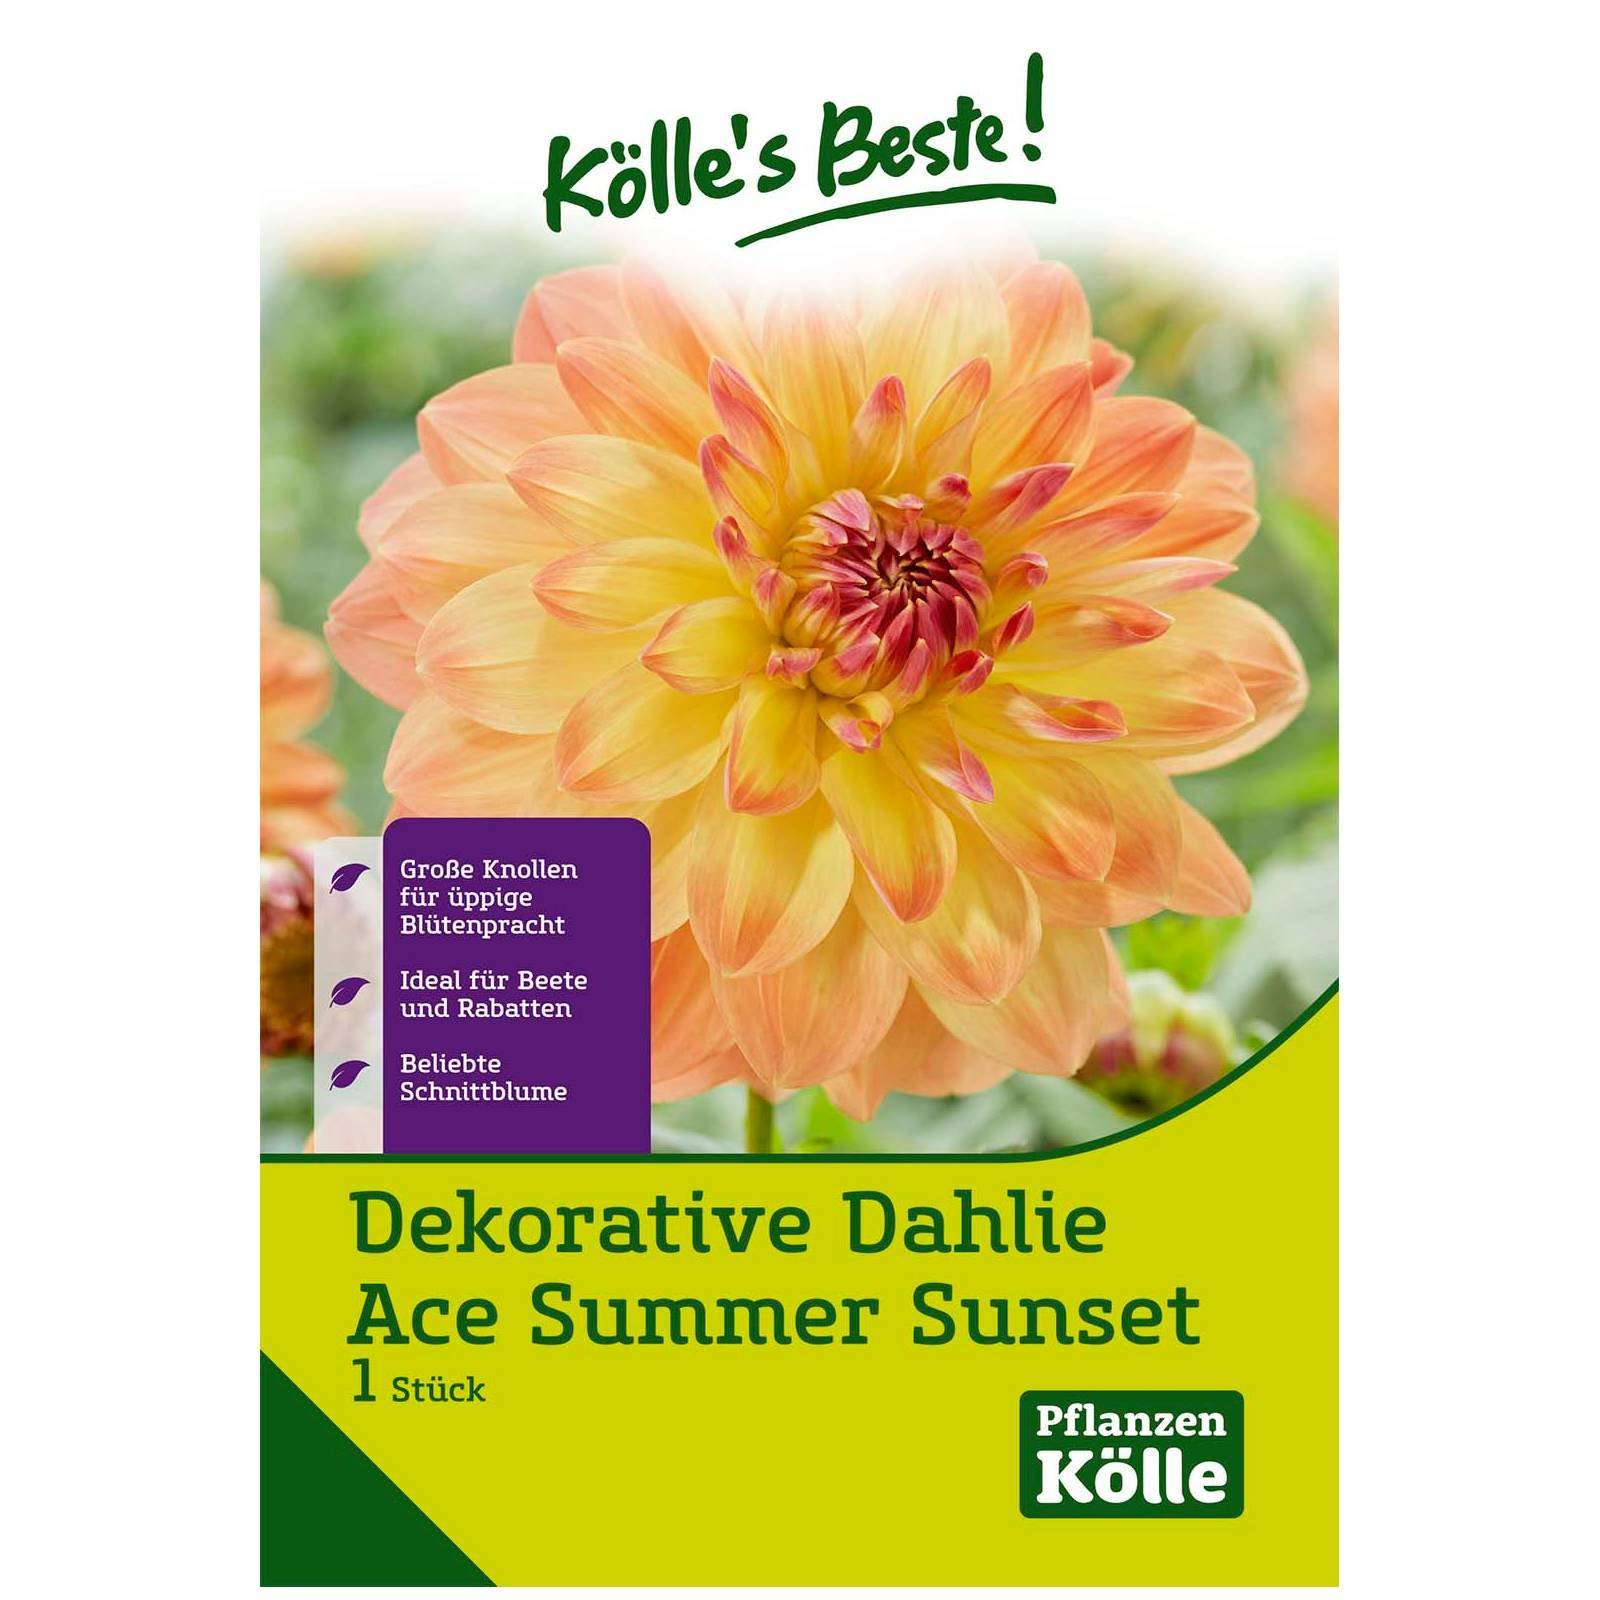 Kölle's Beste Decorative Dahlie 'Ace Summer Sunset' gelb/rot, 1 Blumenknolle